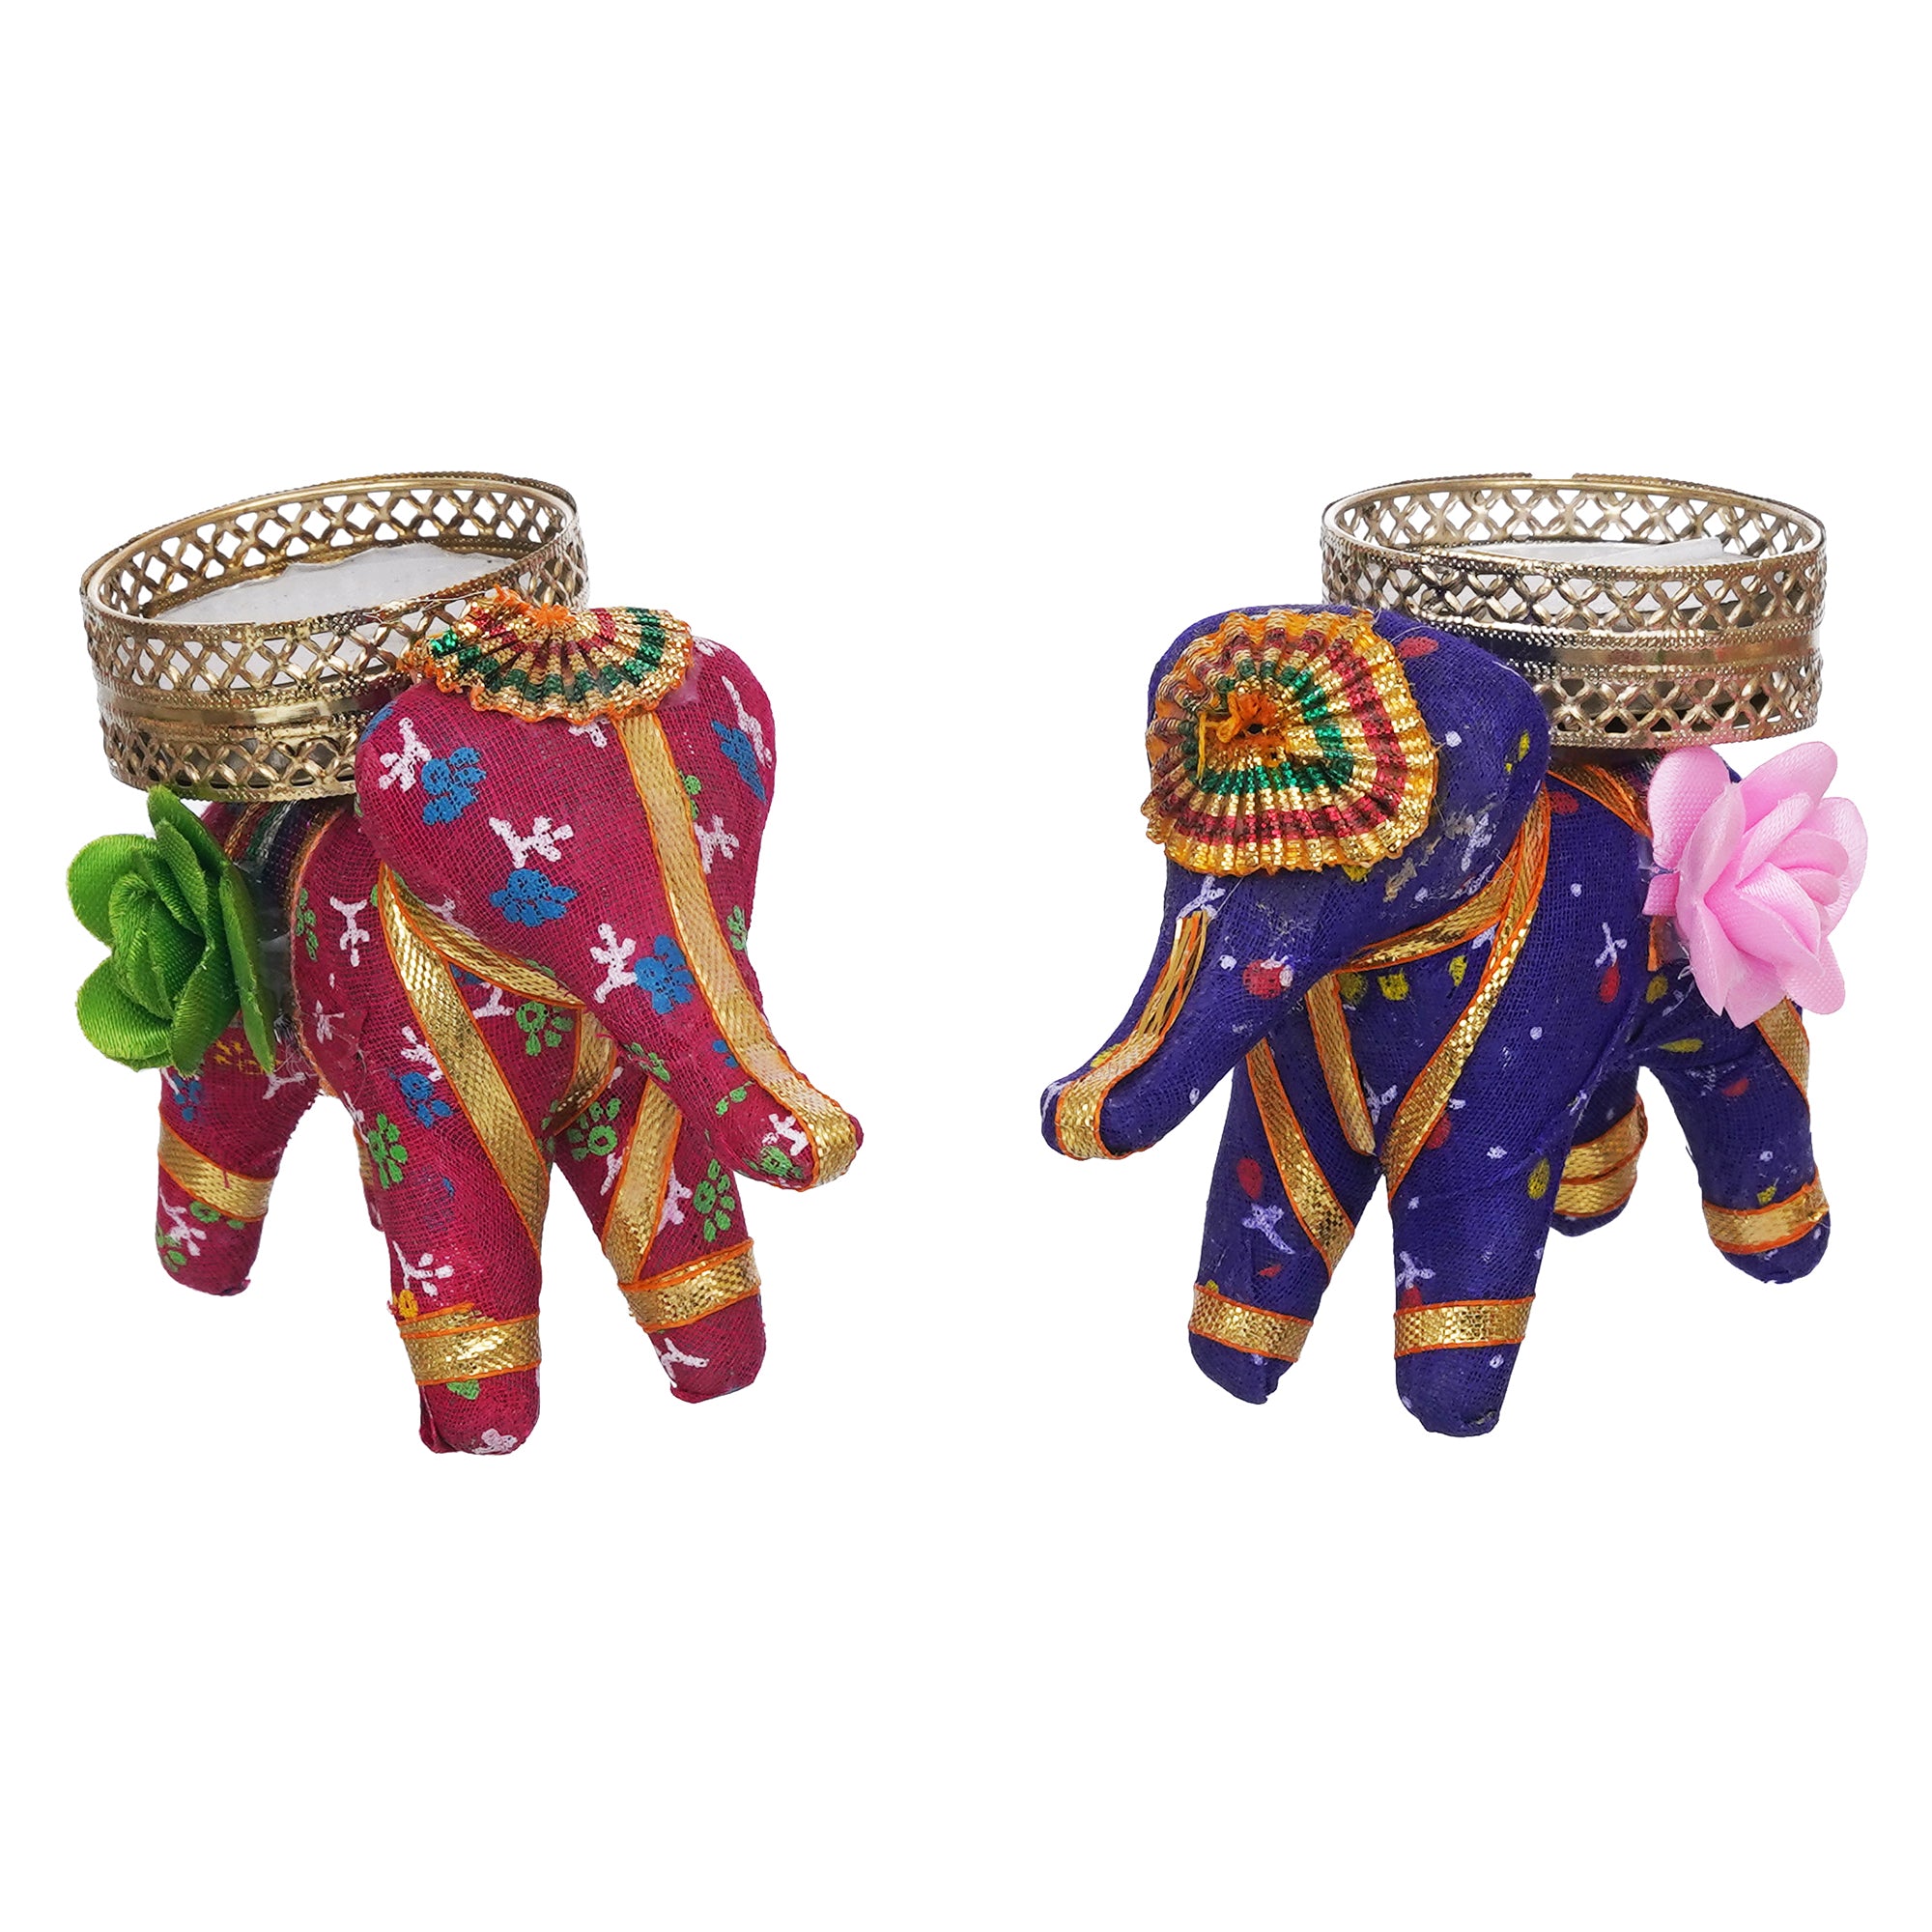 eCraftIndia Pink and Purple Elephant Decorative Tea Light Candle Holders (Set of 2) 7